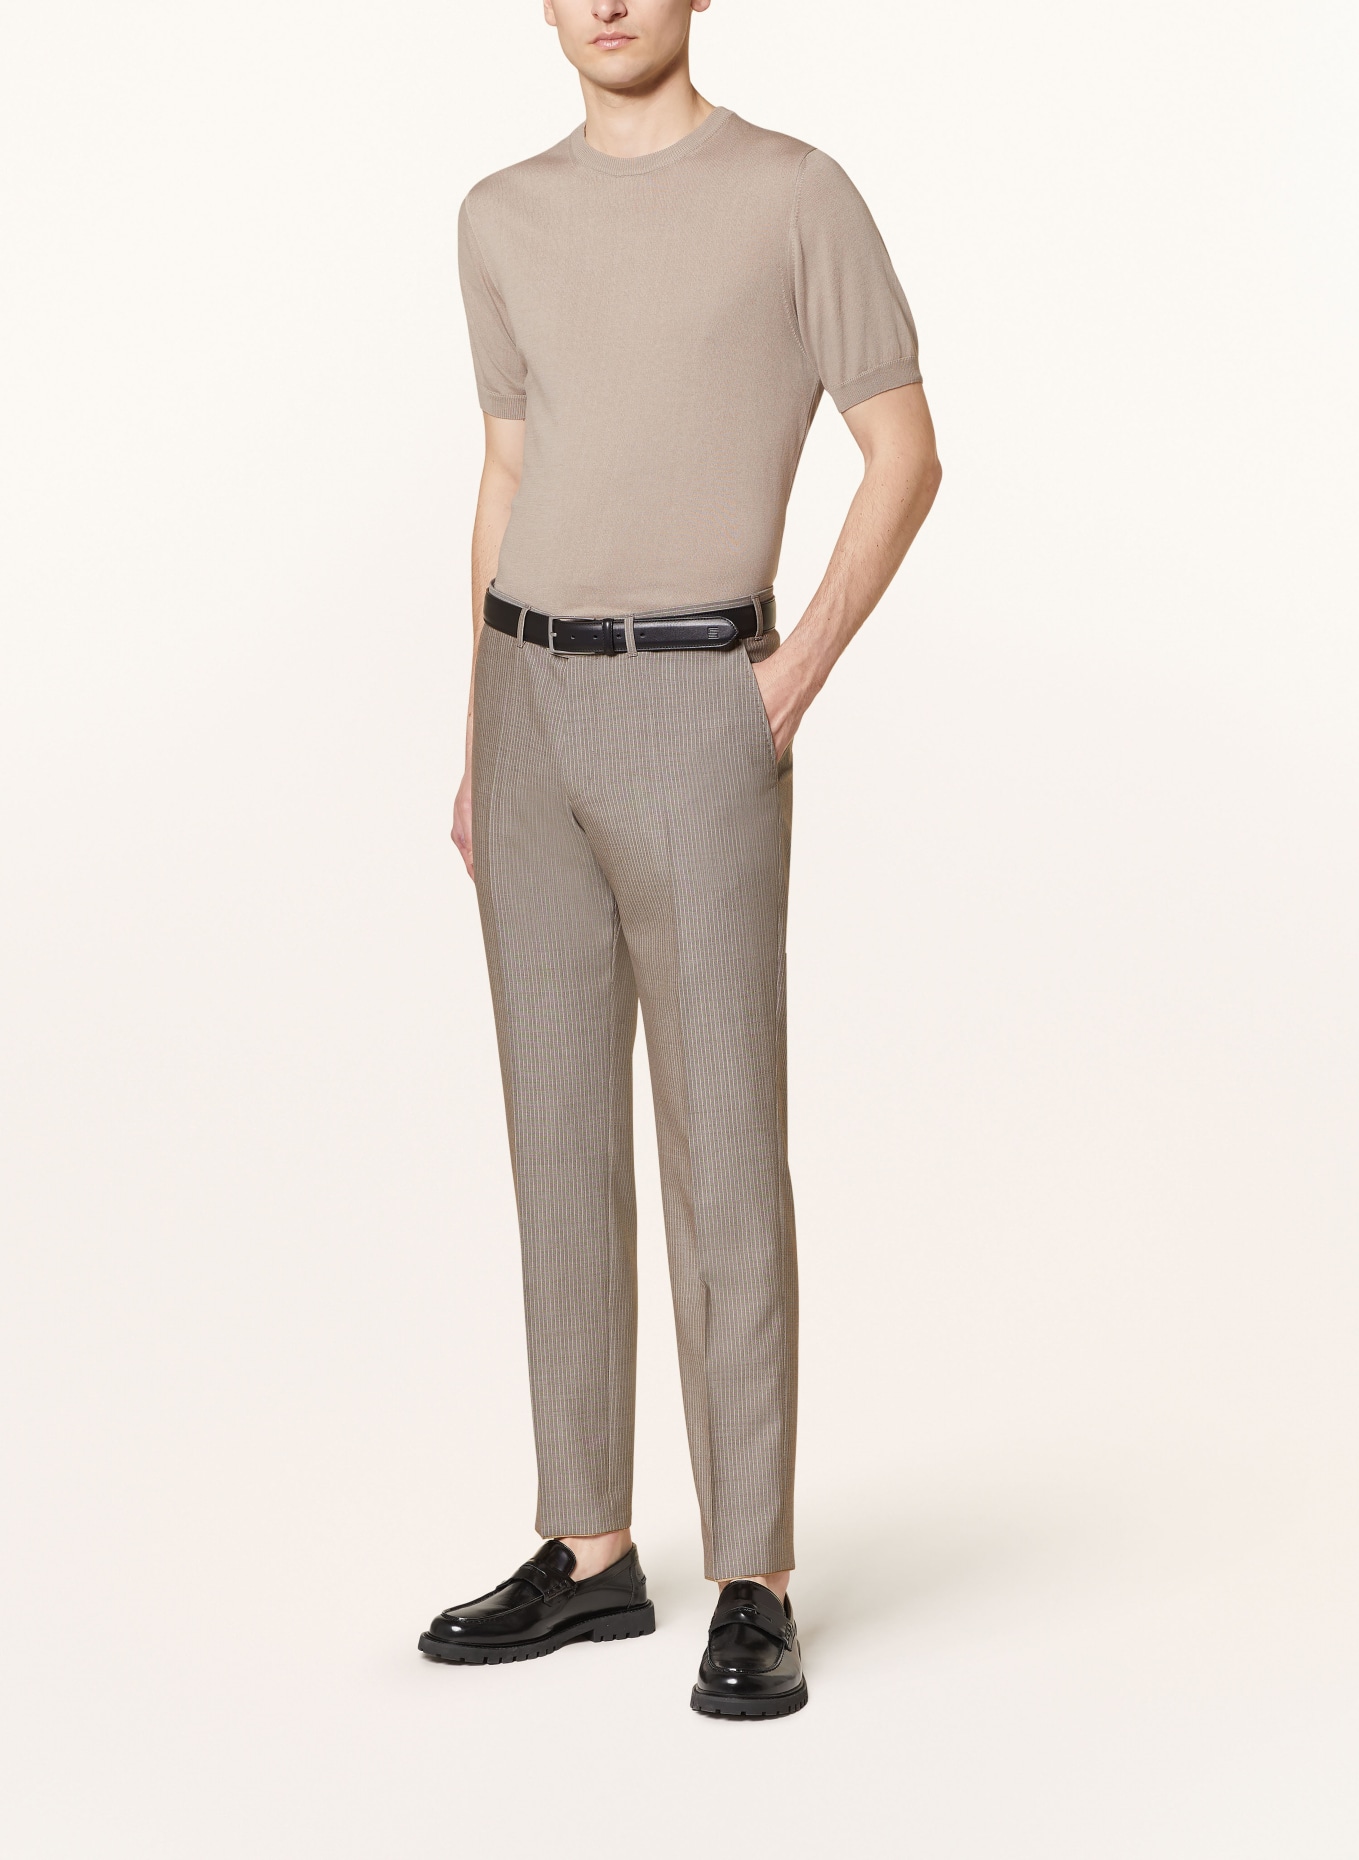 EDUARD DRESSLER Anzughose Slim Fit, Farbe: 074 BEIGE (Bild 3)